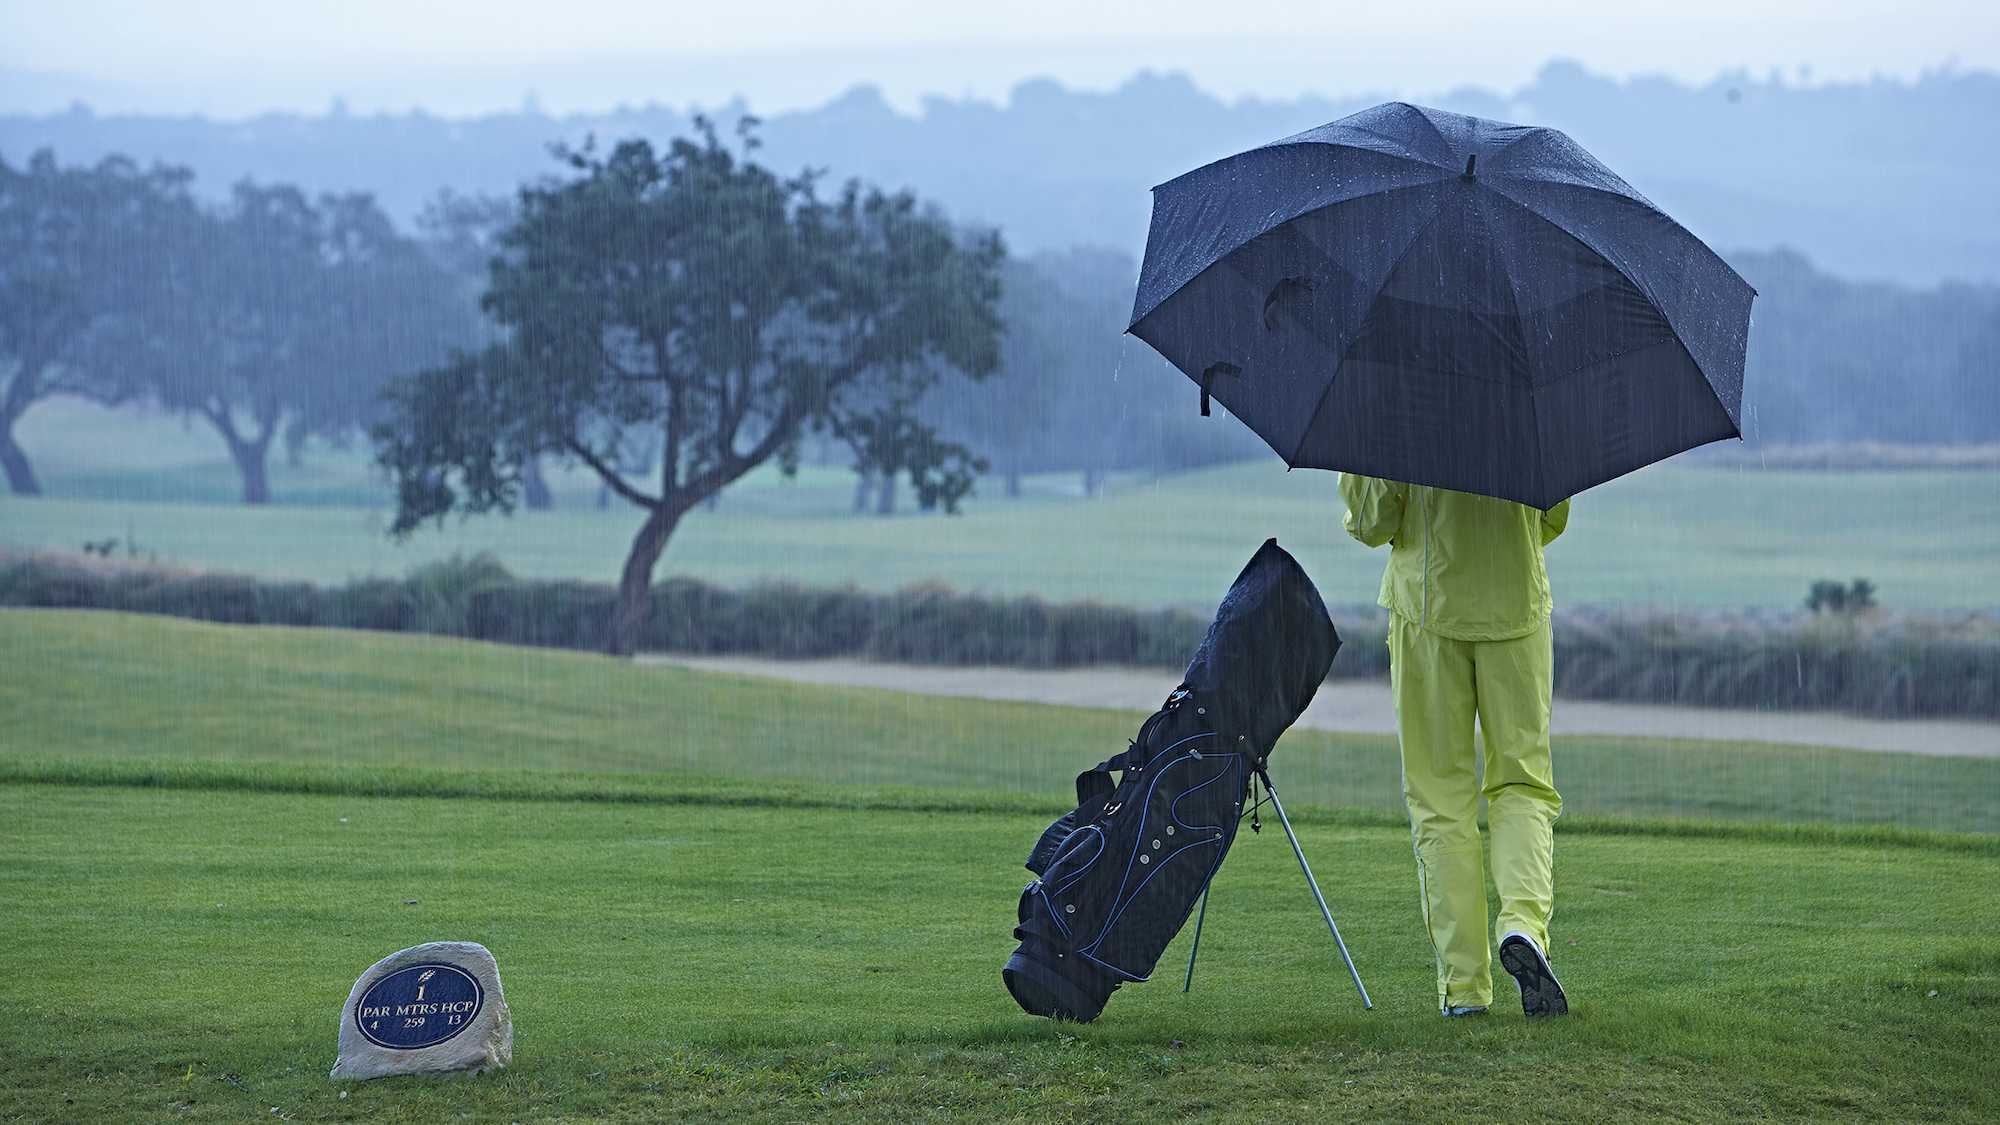 women's short sleeve golf rain jacket